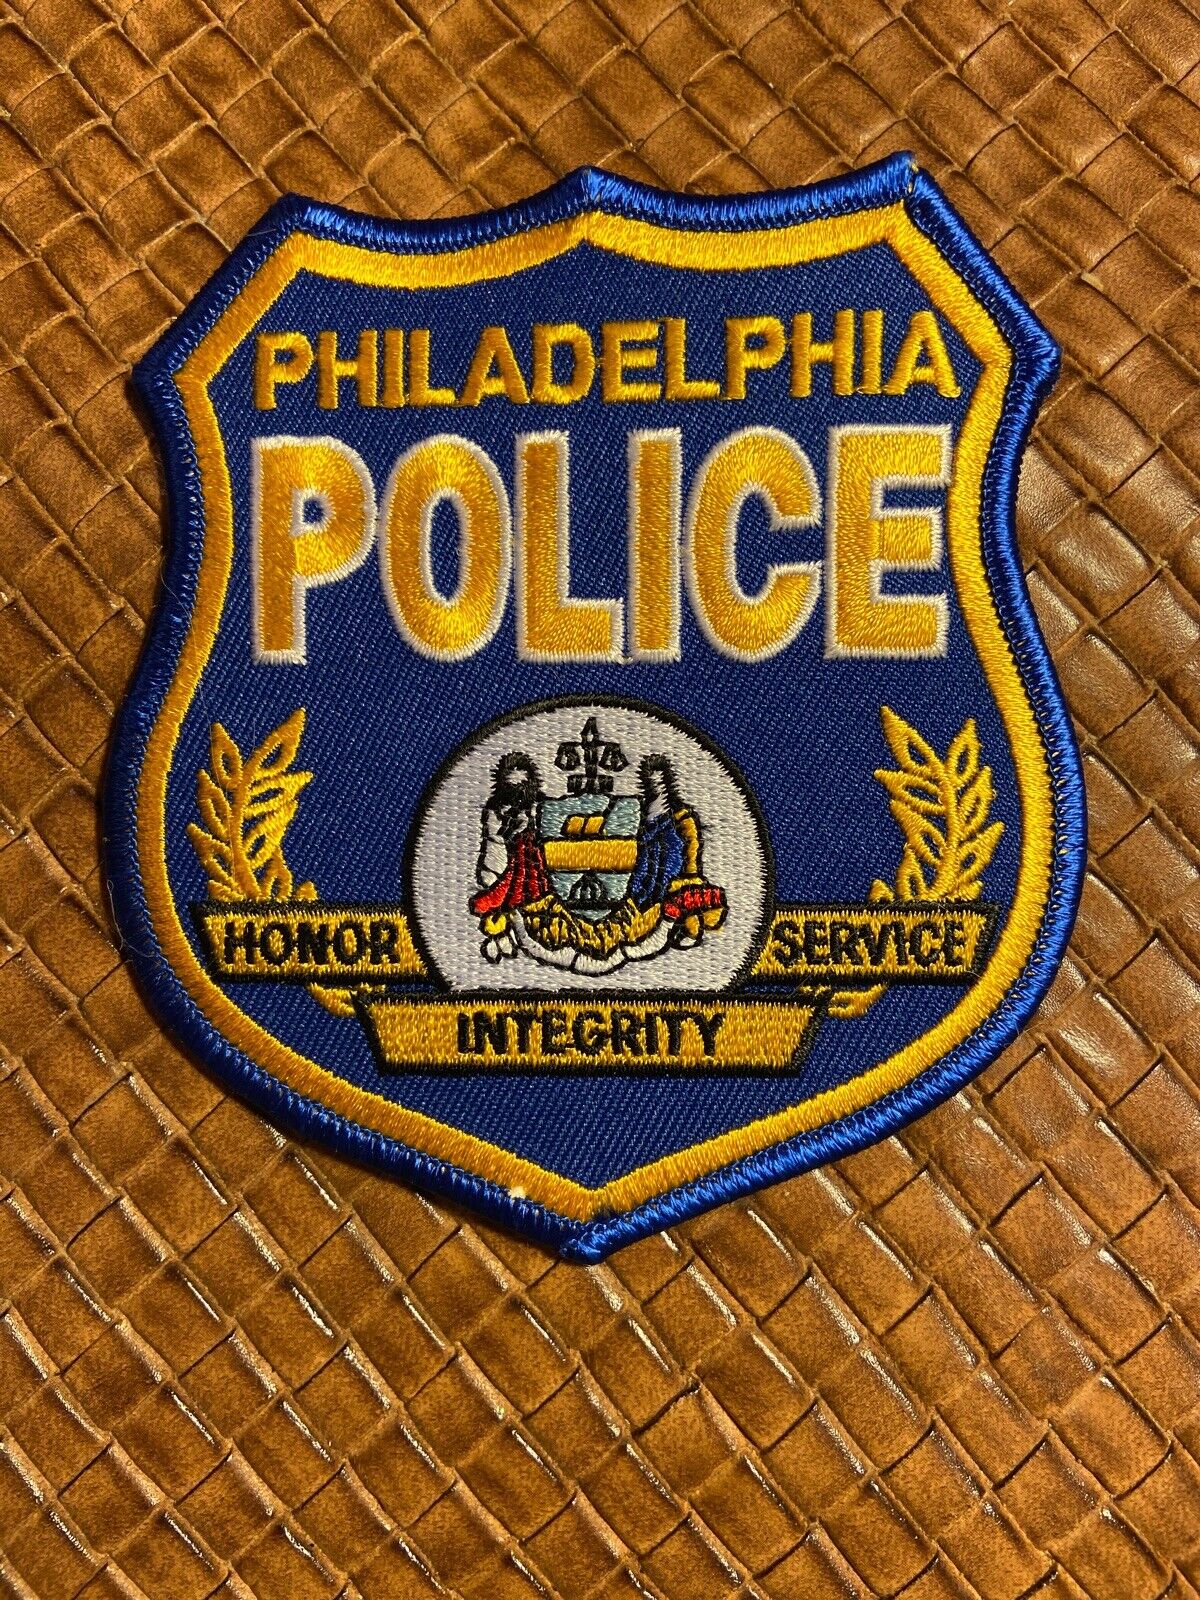 Philadelphia Police Patch